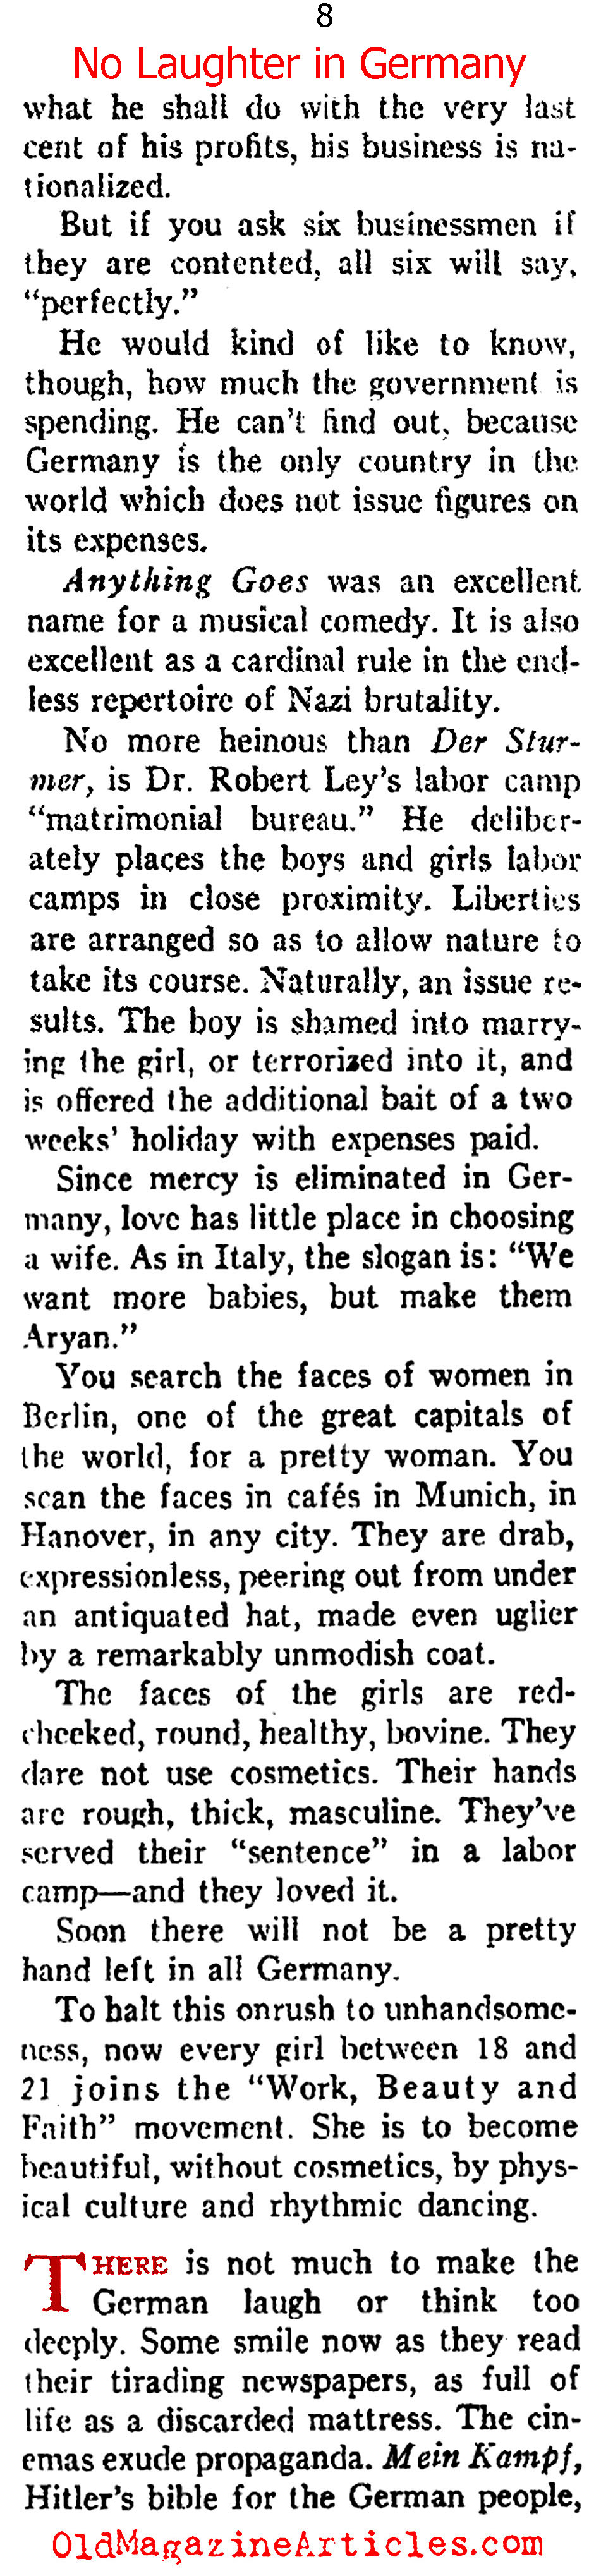 Gloom in Germany (Ken Magazine, 1938)